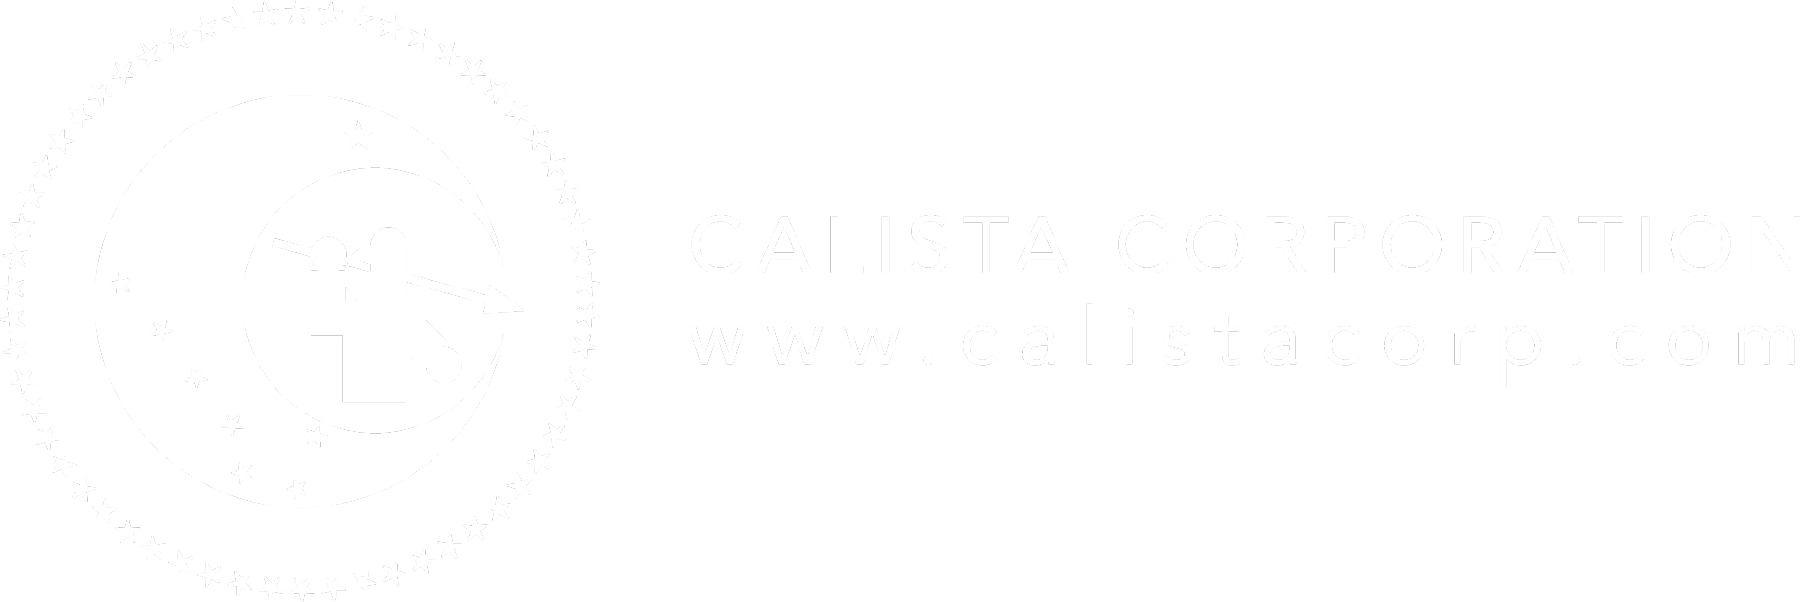 Calista Corporation logo